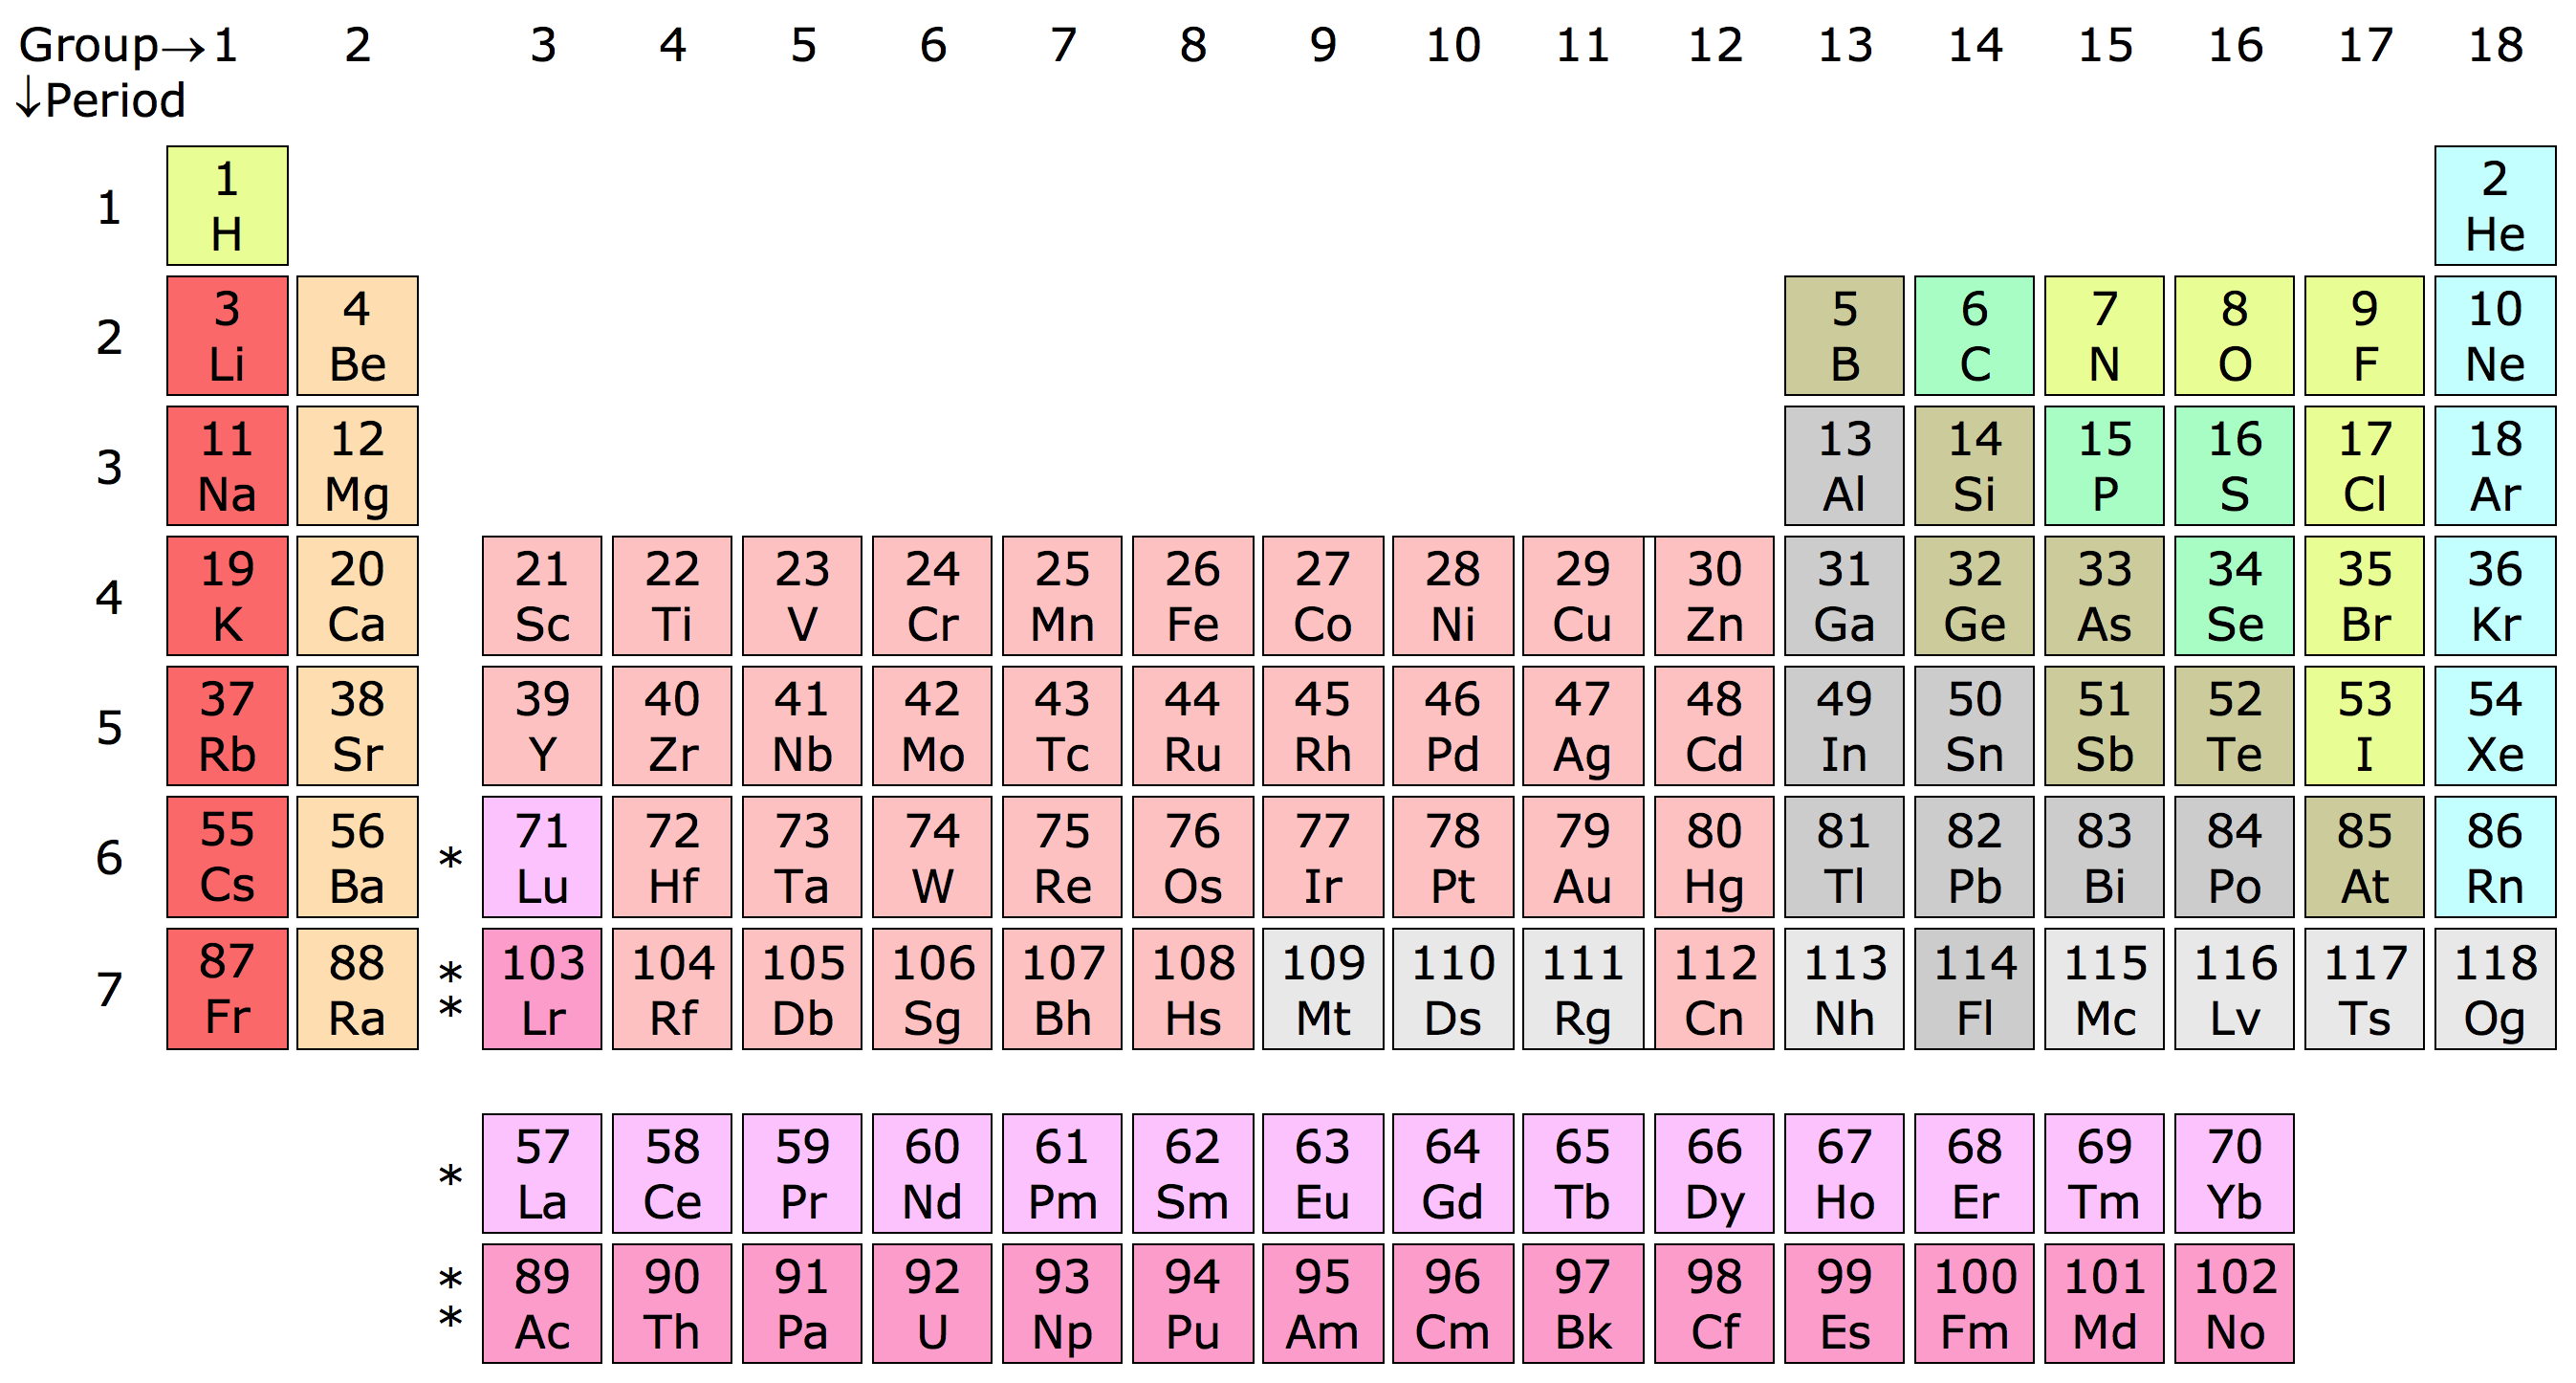 https://en.wikipedia.org/wiki/Periodic_table